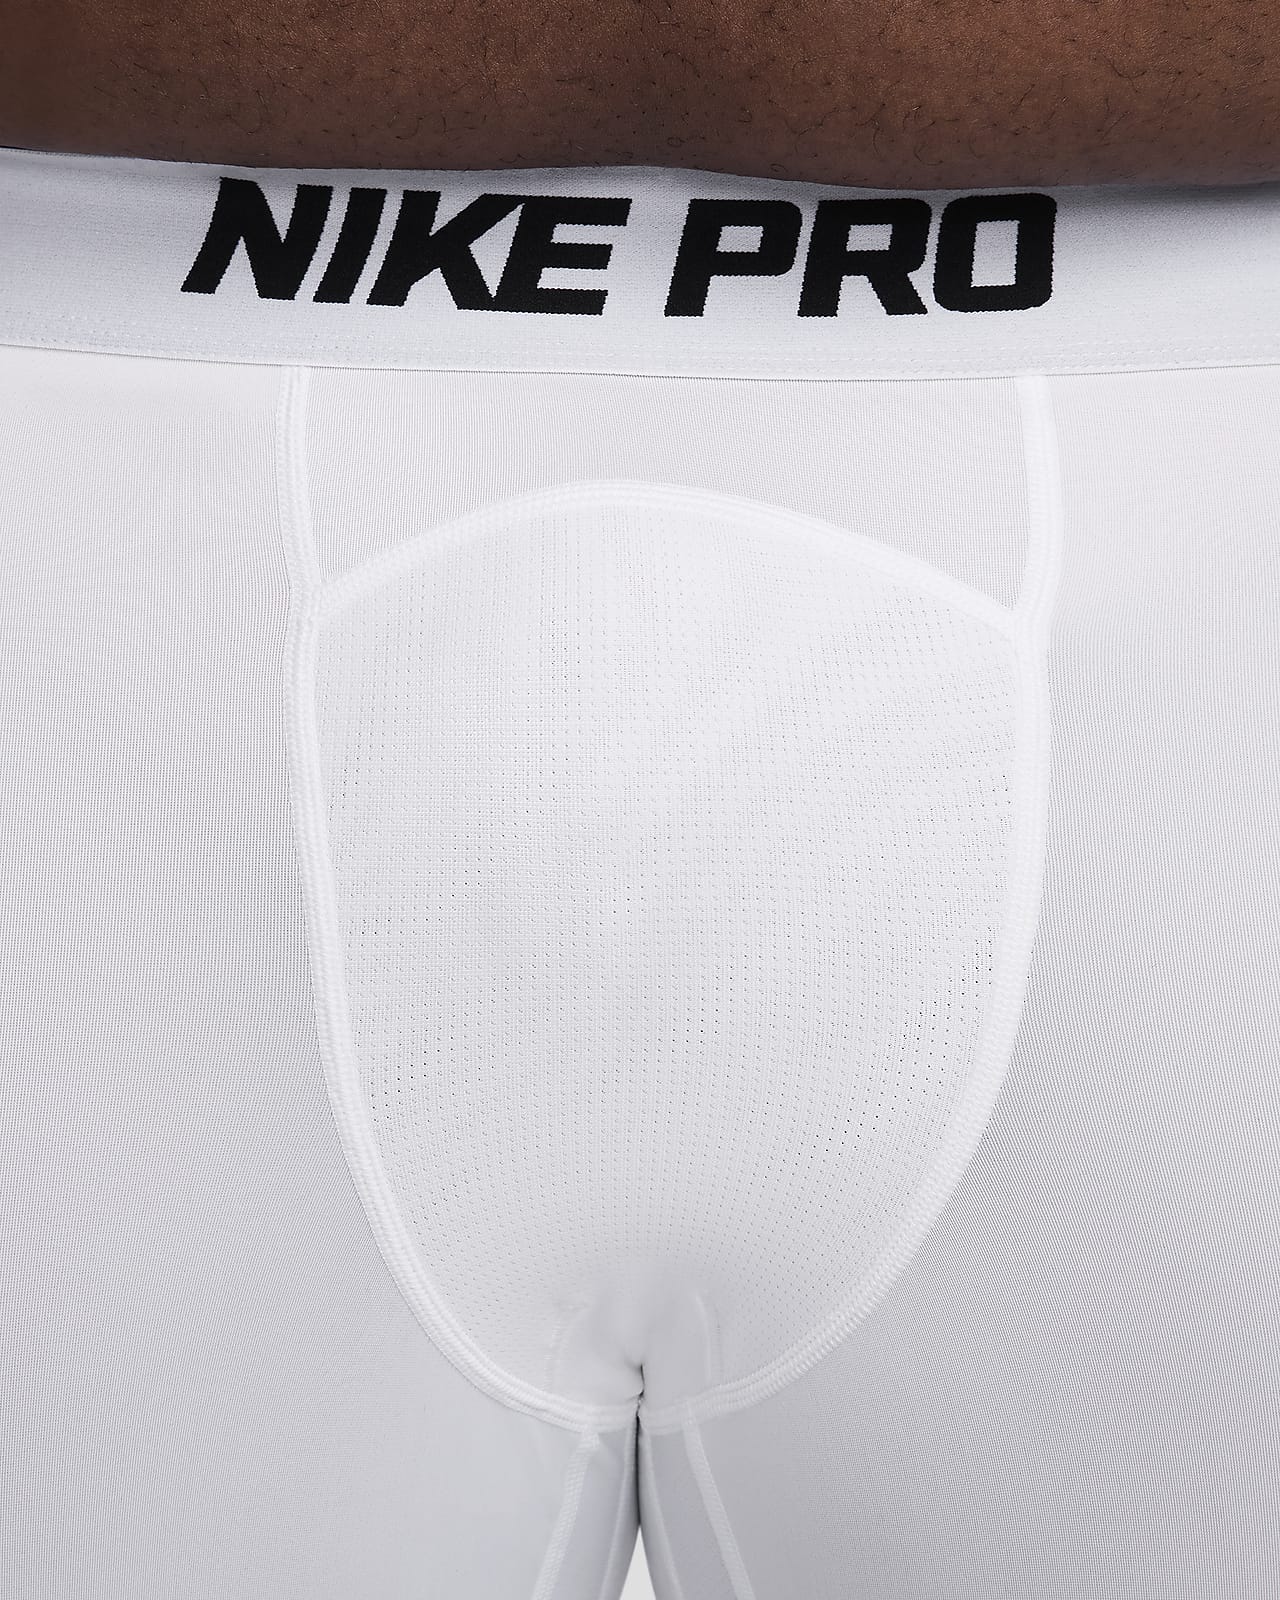 3 Best Nike Pro Combat Compression Shorts 